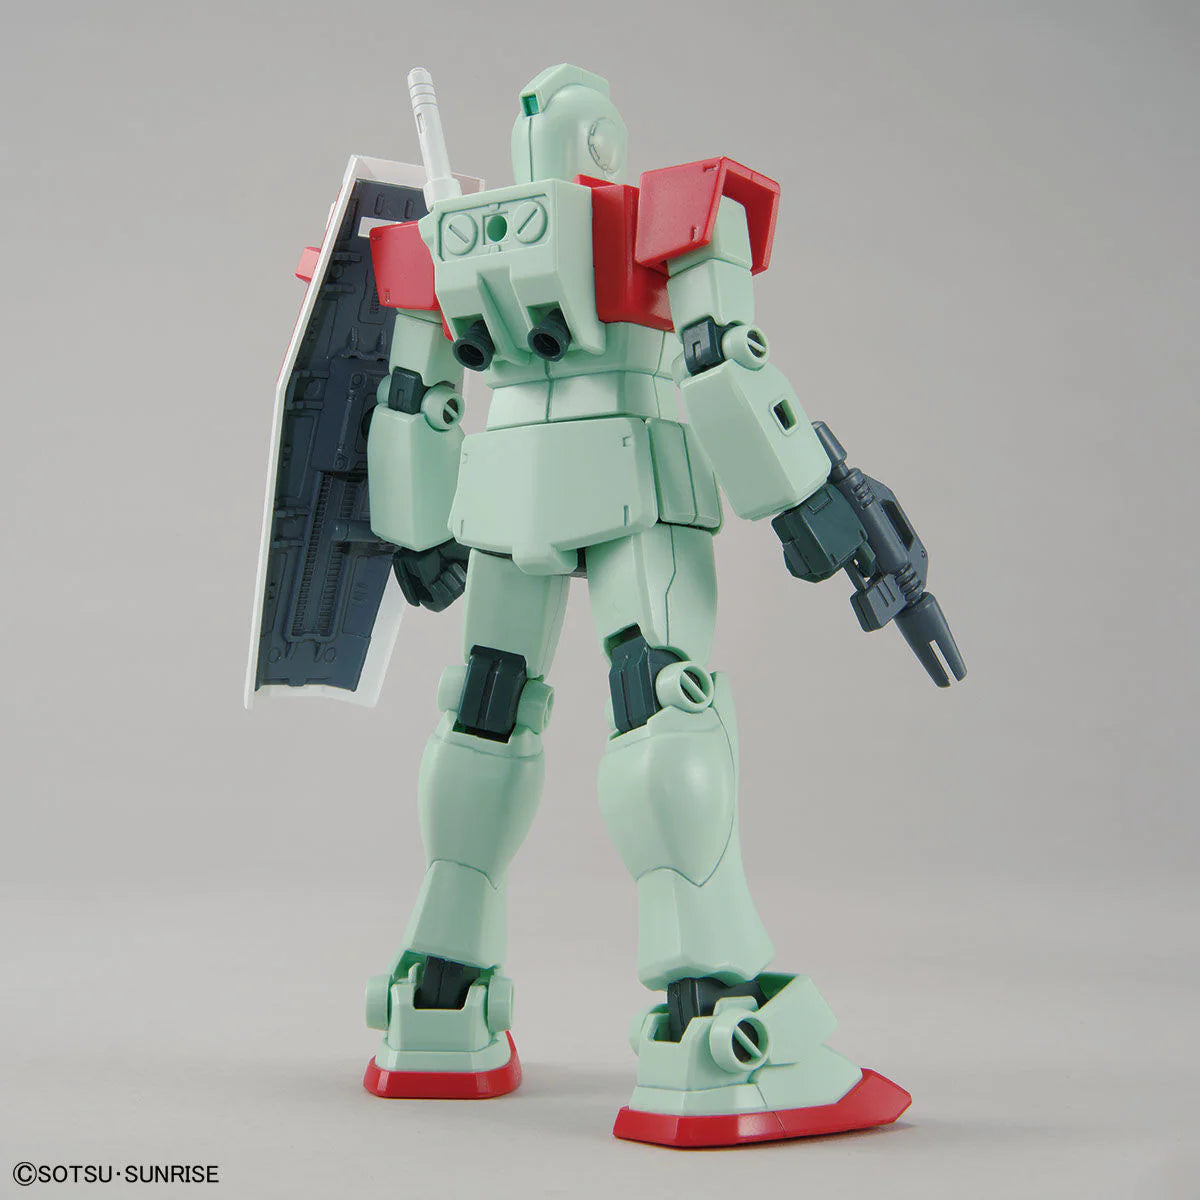 HGUC 1/144 - Gundam Base Limited - GM-GM II-GMIII SET